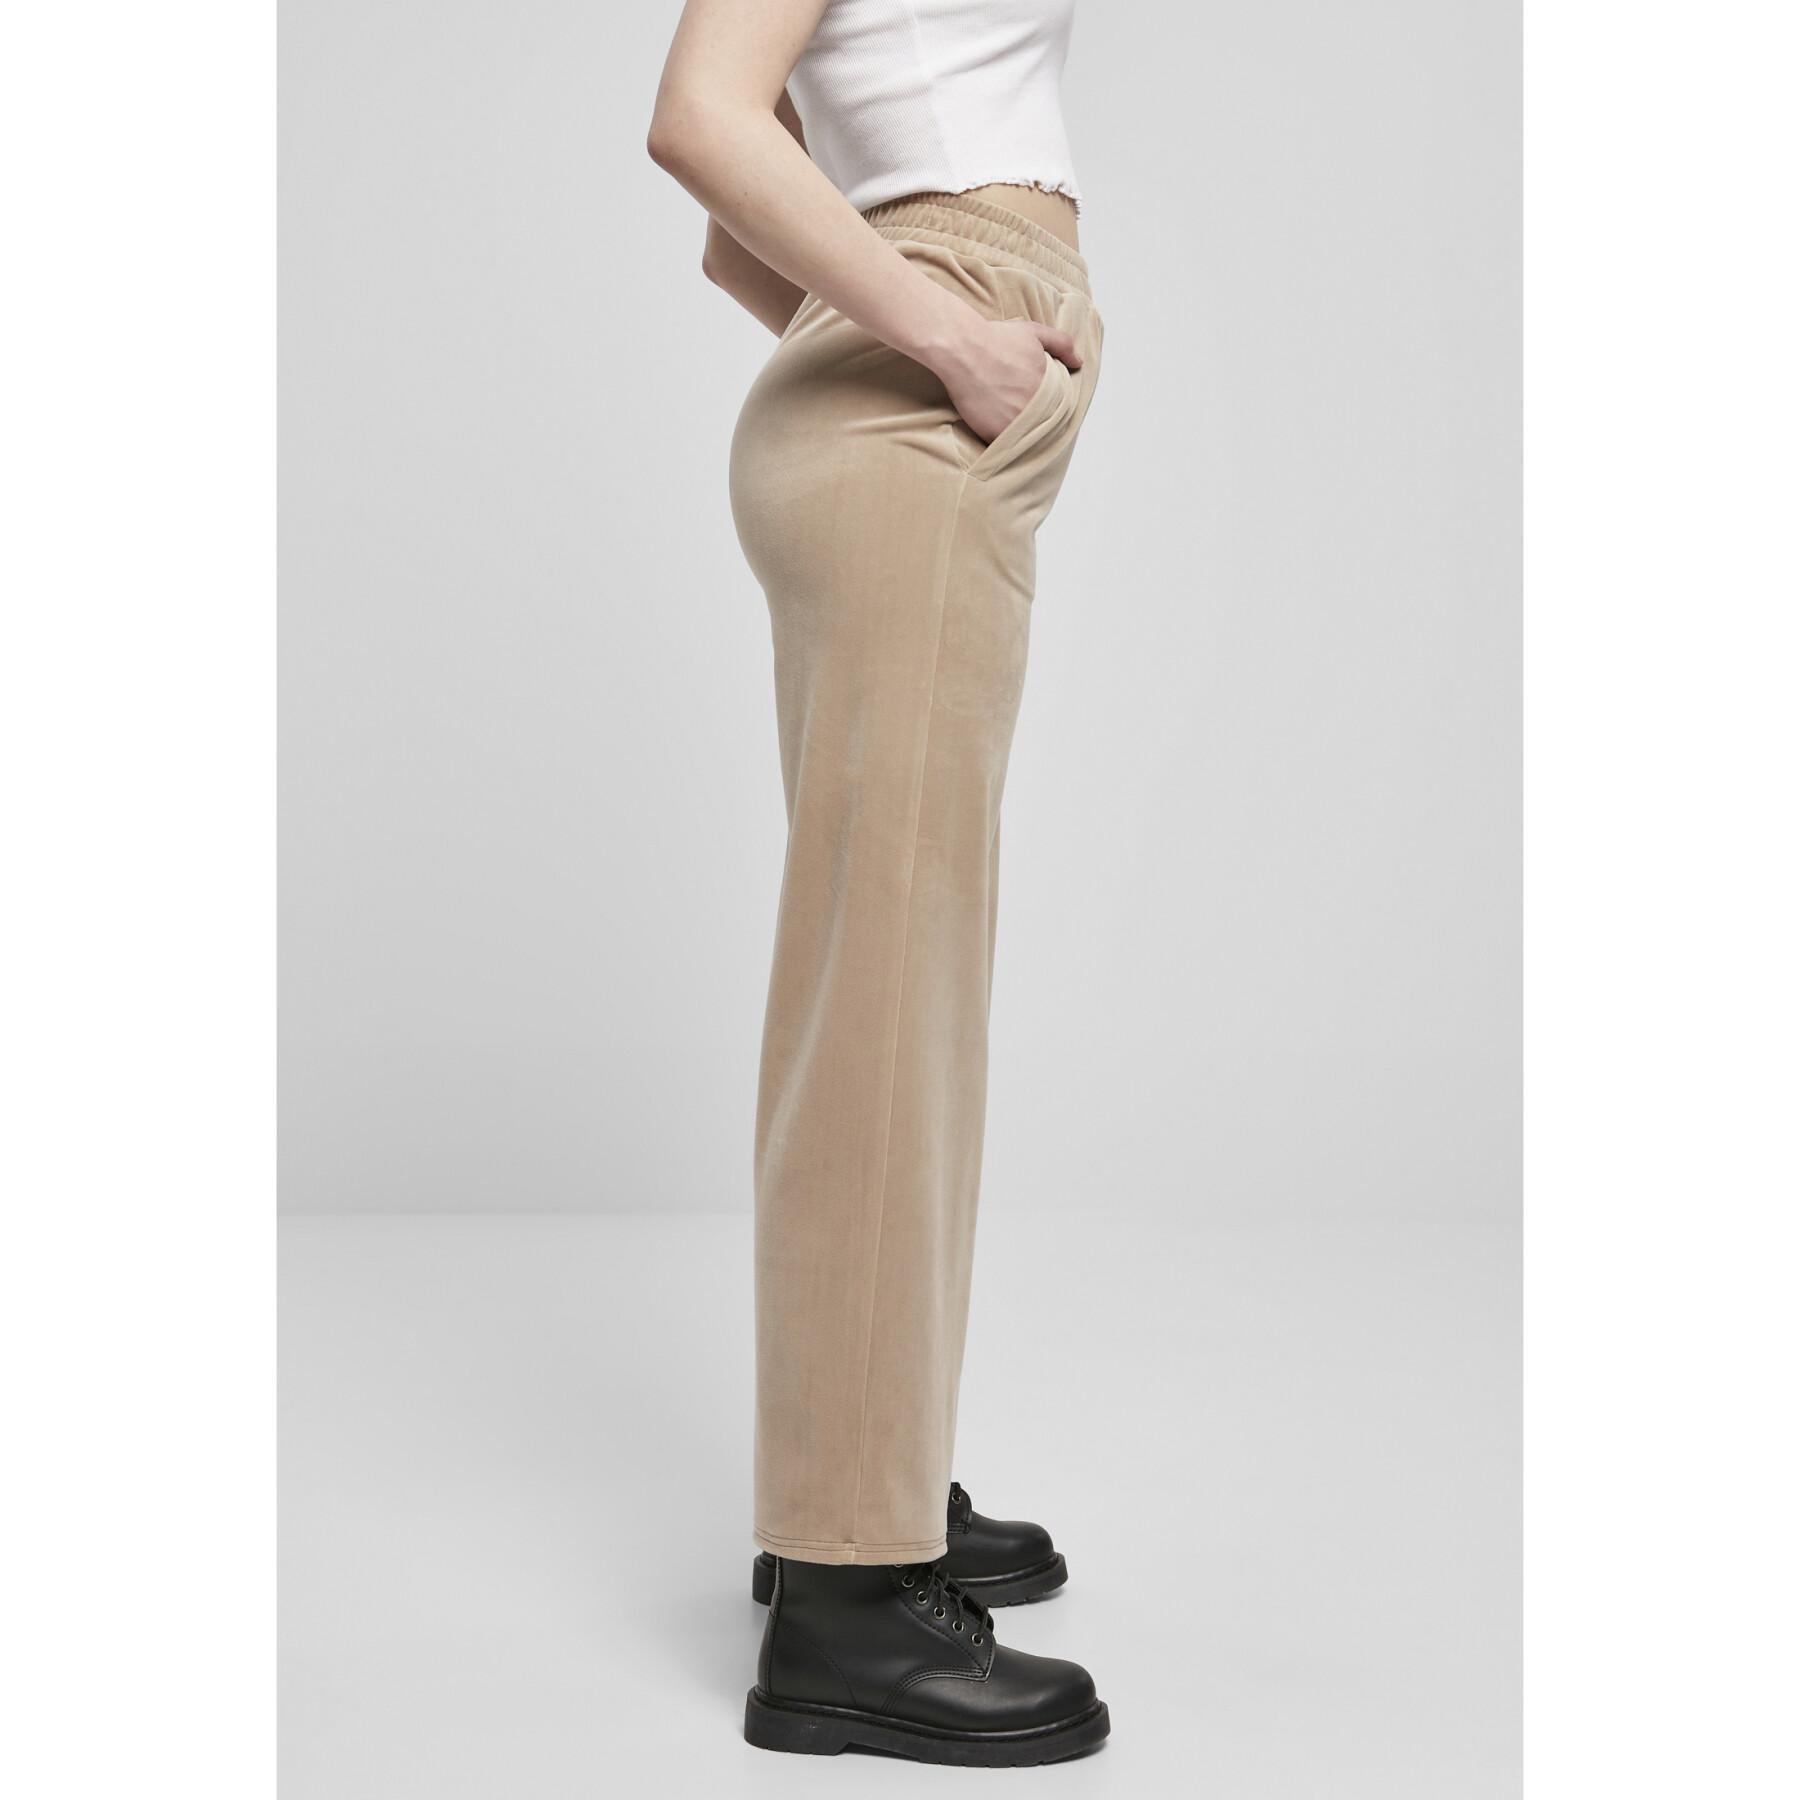 Pantalon femme Urban Classics high waist straight velvet